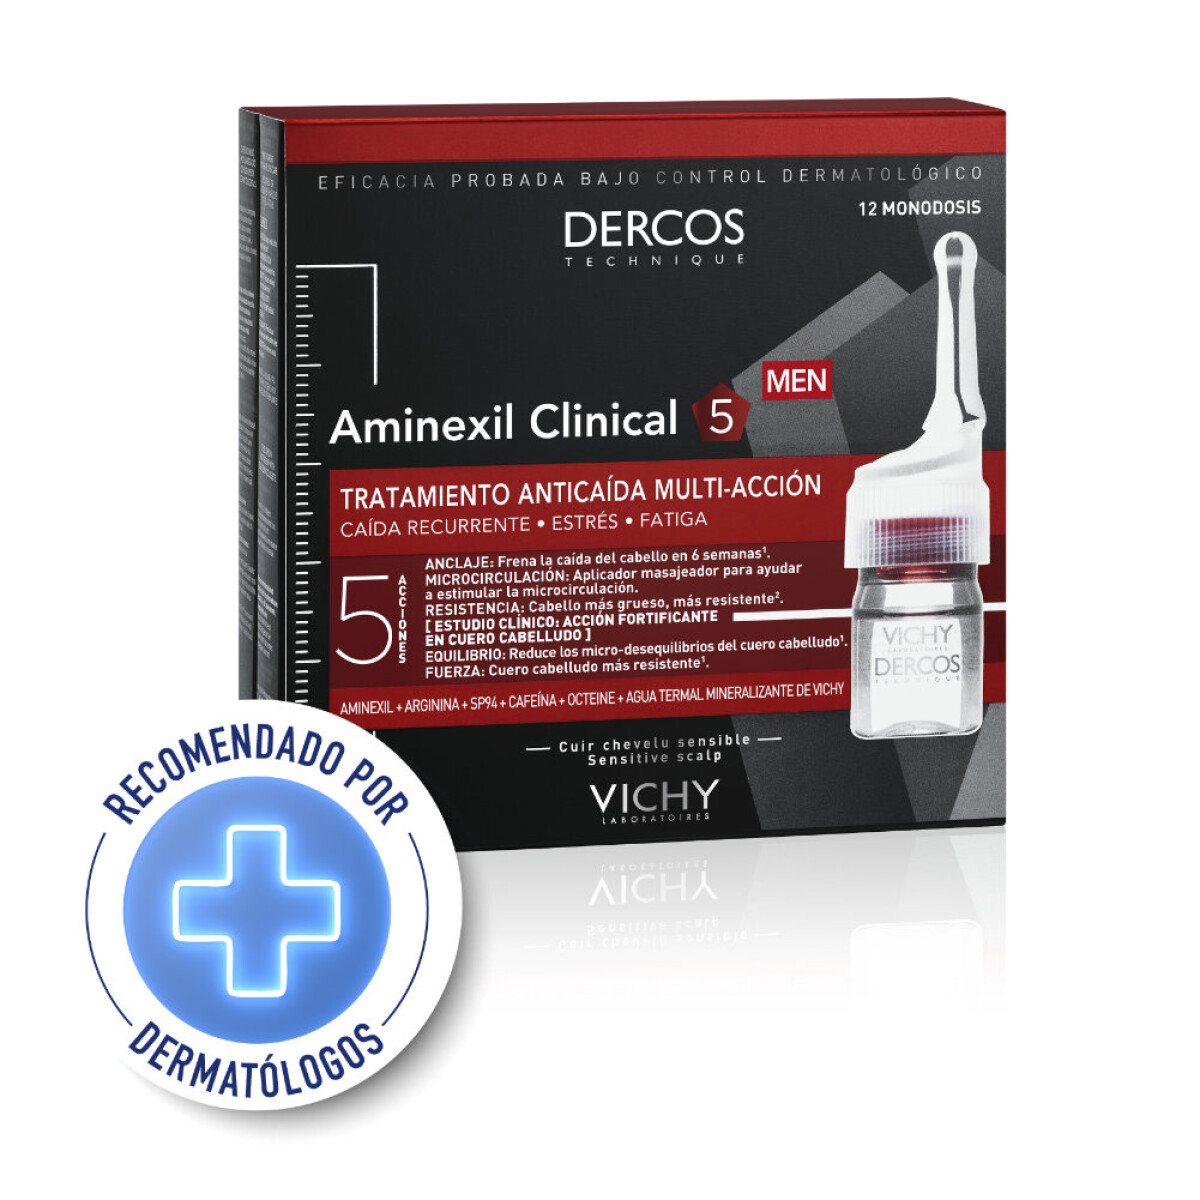 Vichy Dercos Aminexil Clinical 5 Hombre 12 Monodosis. 